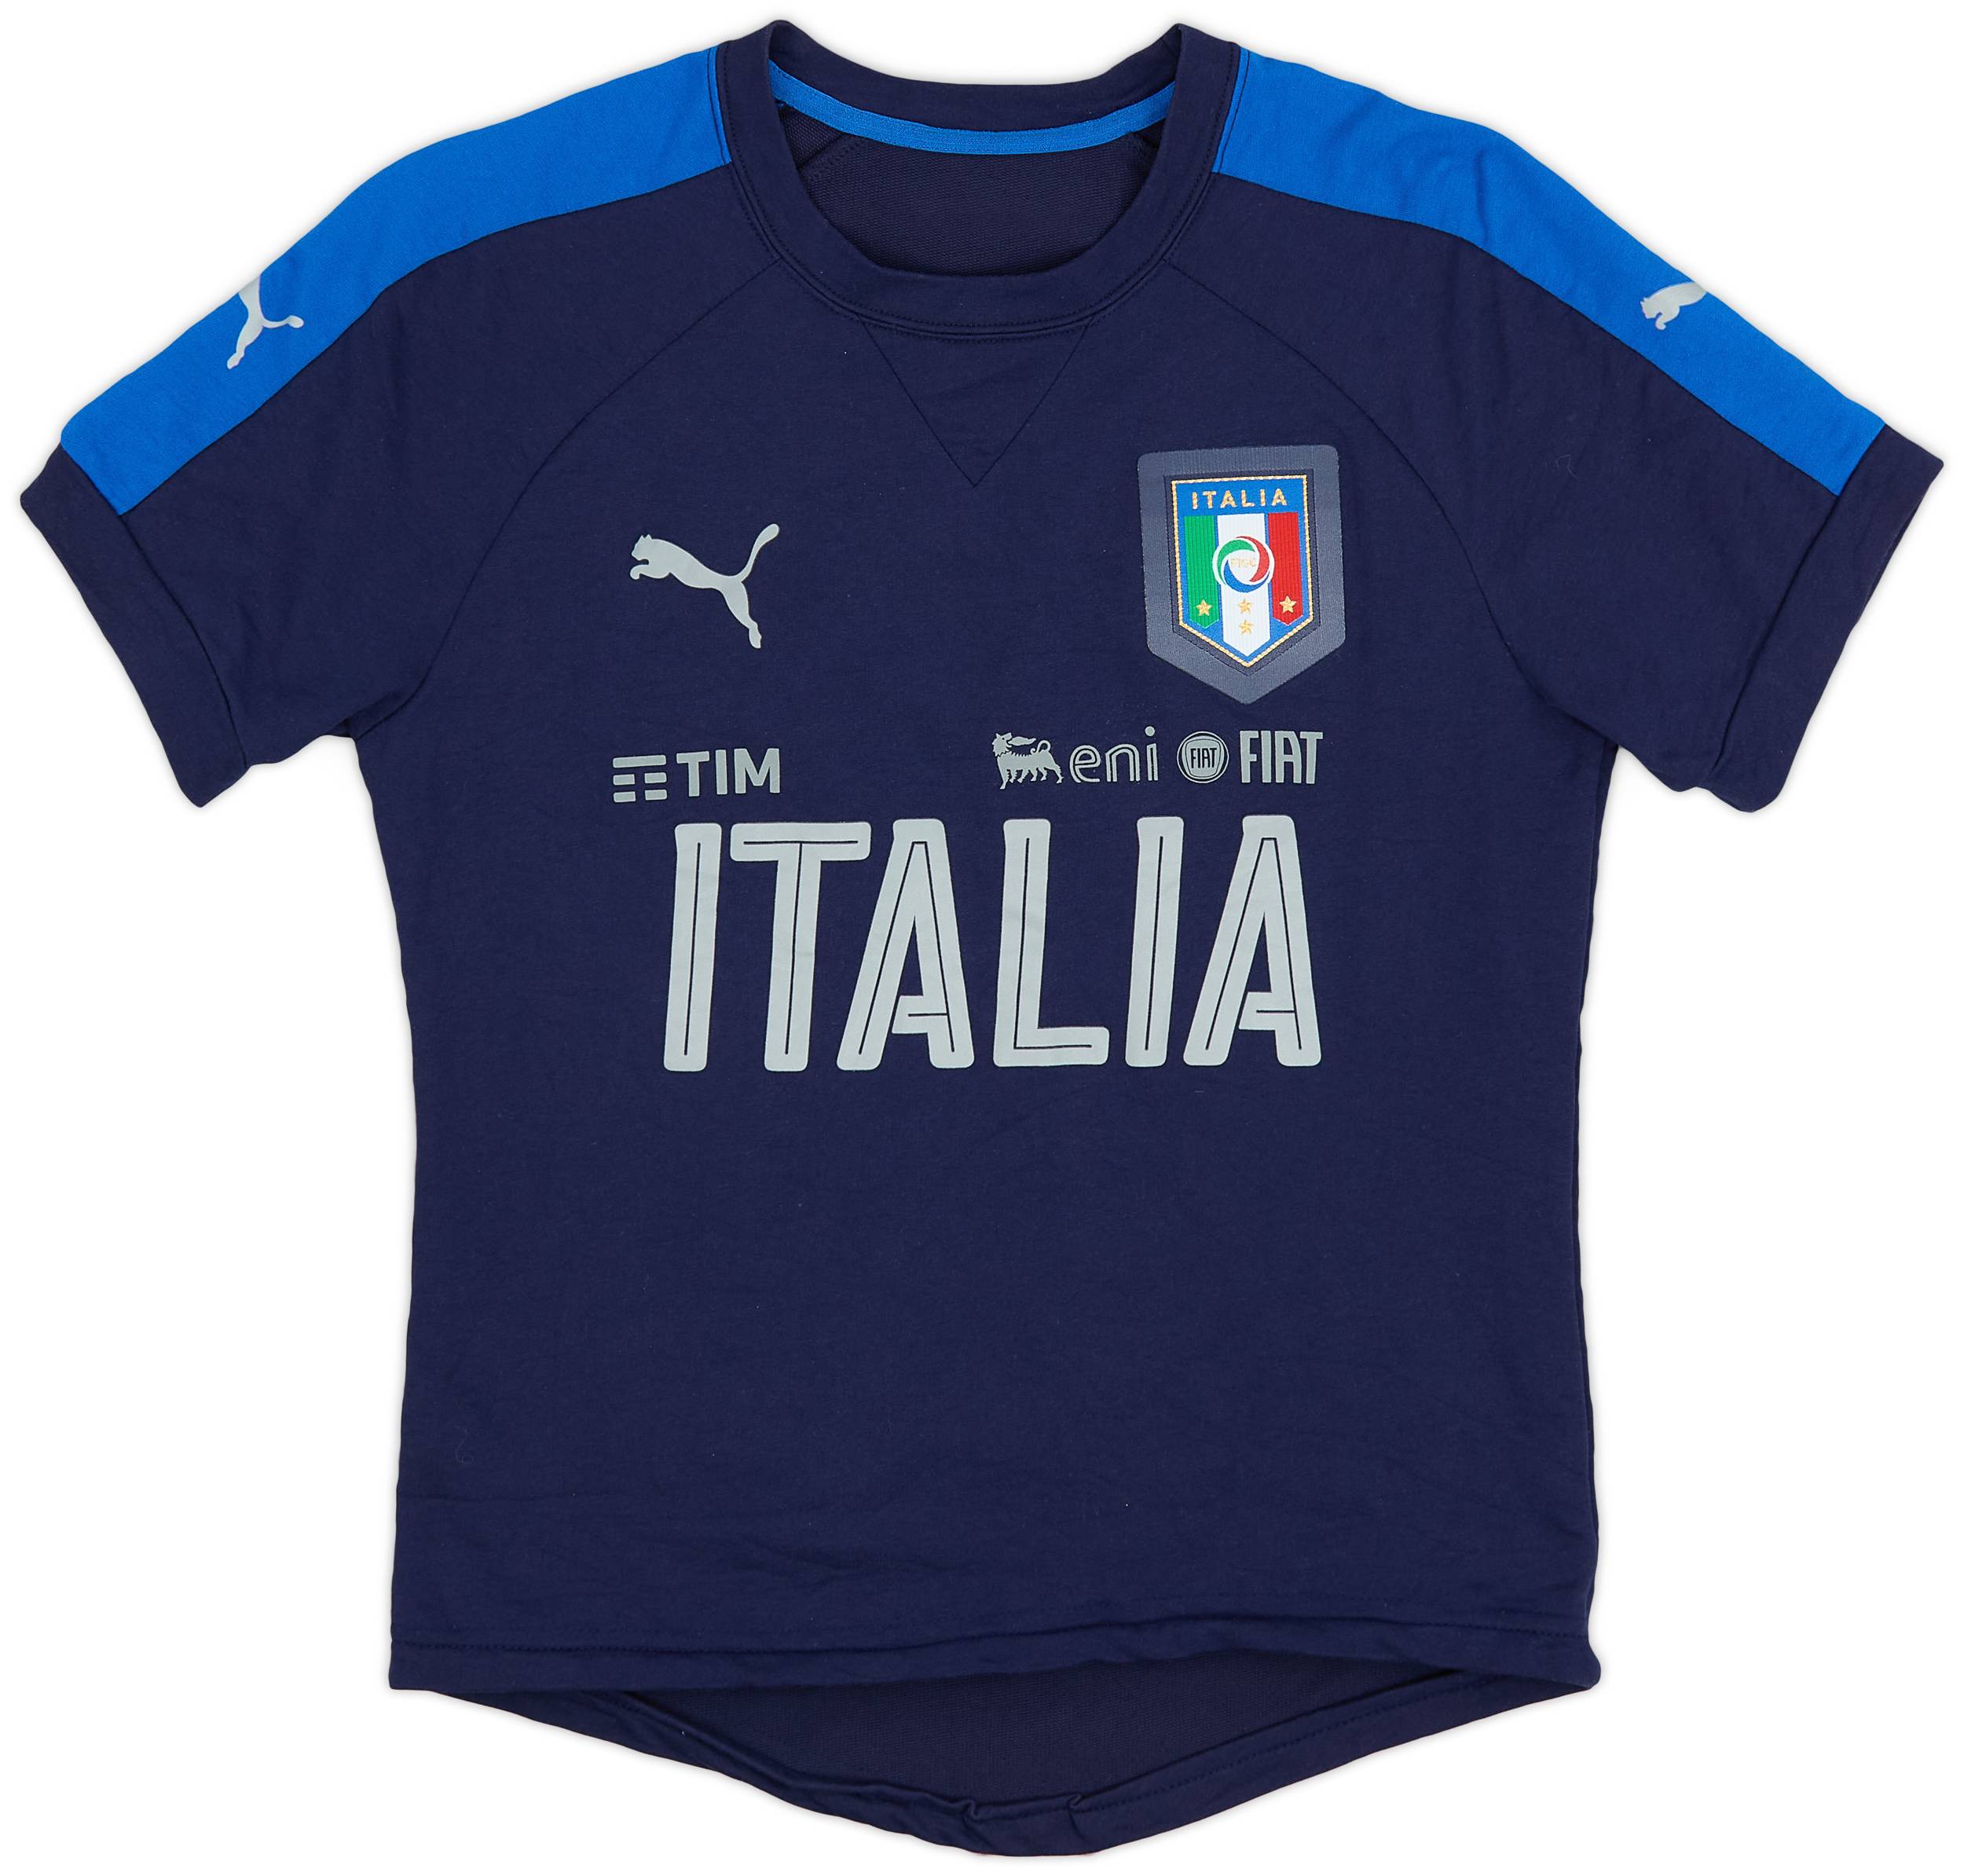 2019-20 Italy Puma Cotton Tee - 9/10 - (Women's S)